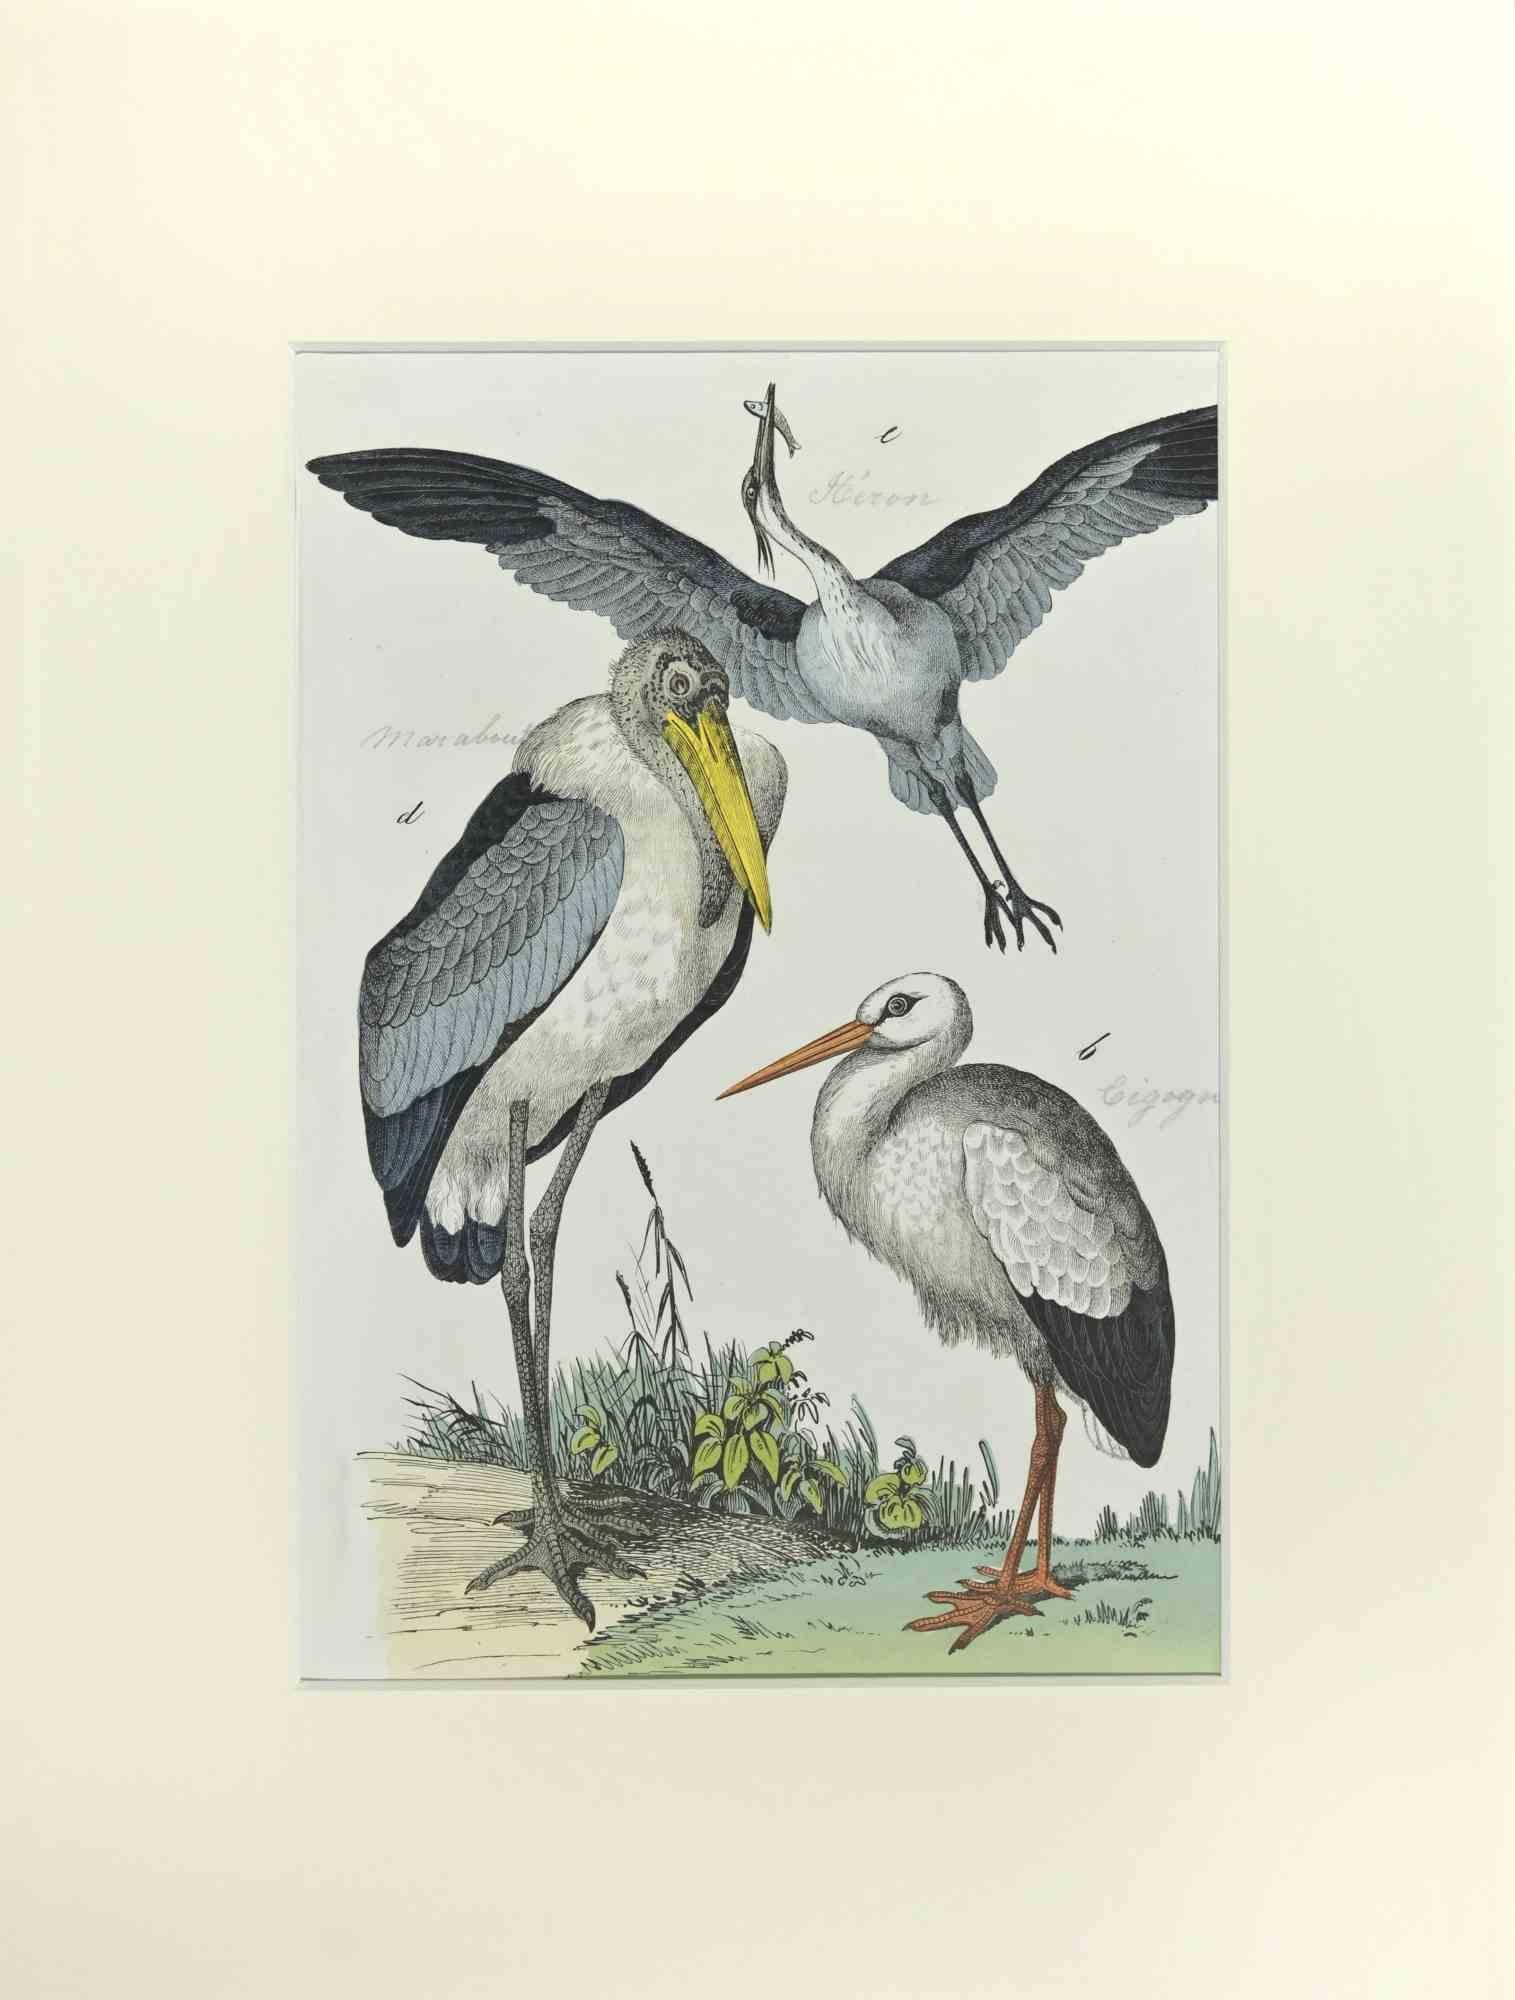 Heron and Stork - Etching by Johann Friedrich Naumann - 1840